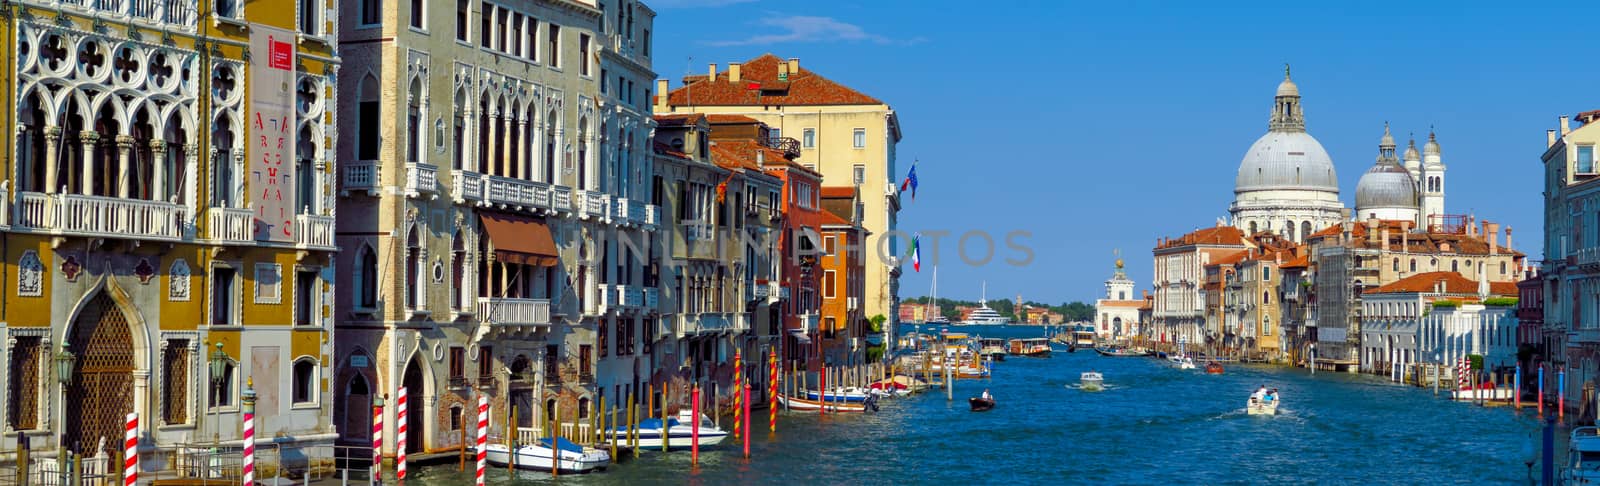 Venice - Panoramic view to Santa Maria della Salute by Venakr